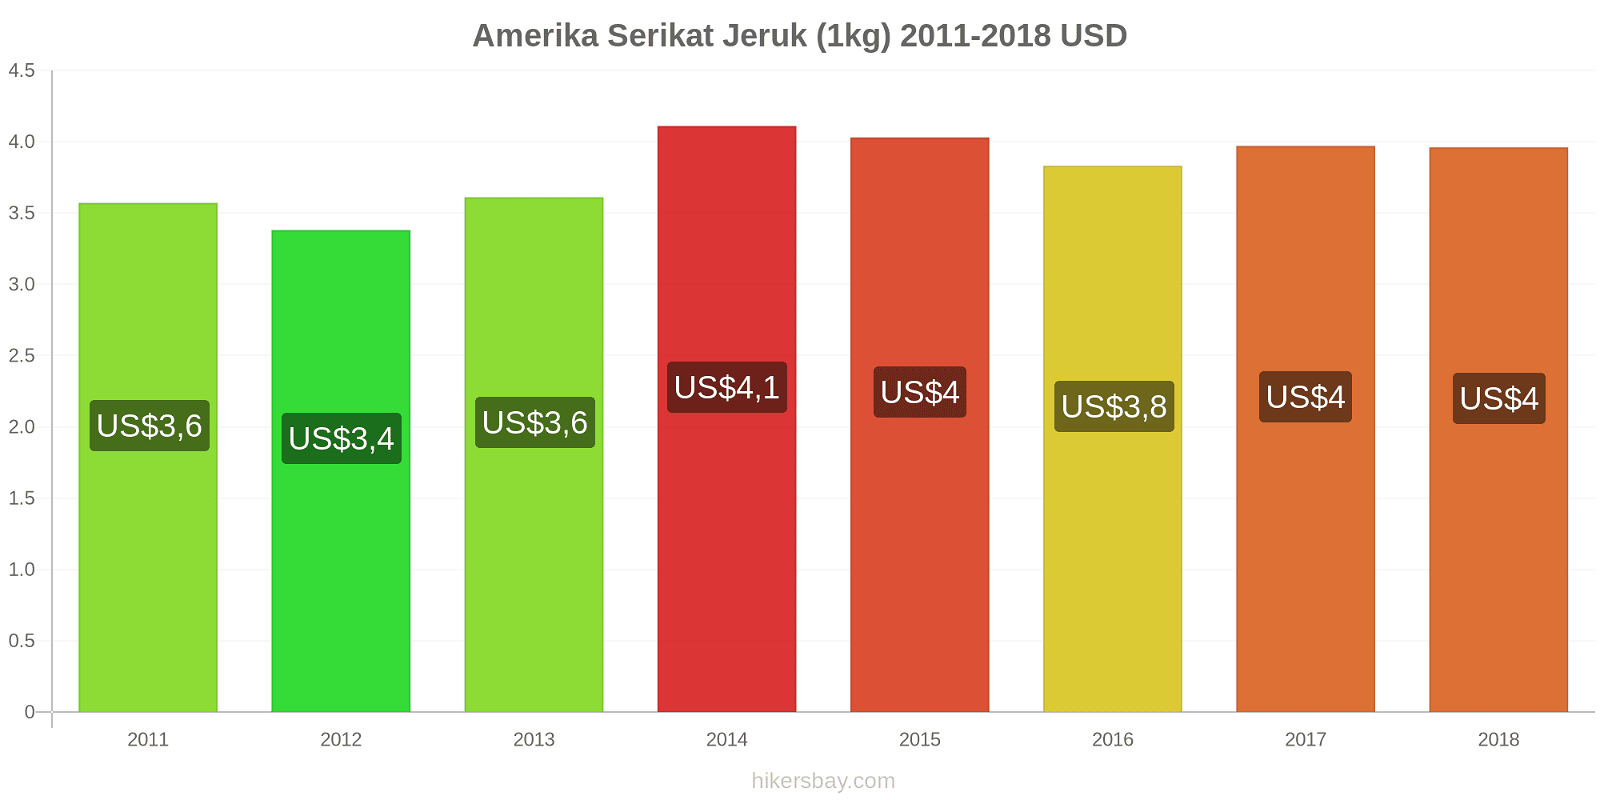 Amerika Serikat perubahan harga Jeruk (1kg) hikersbay.com